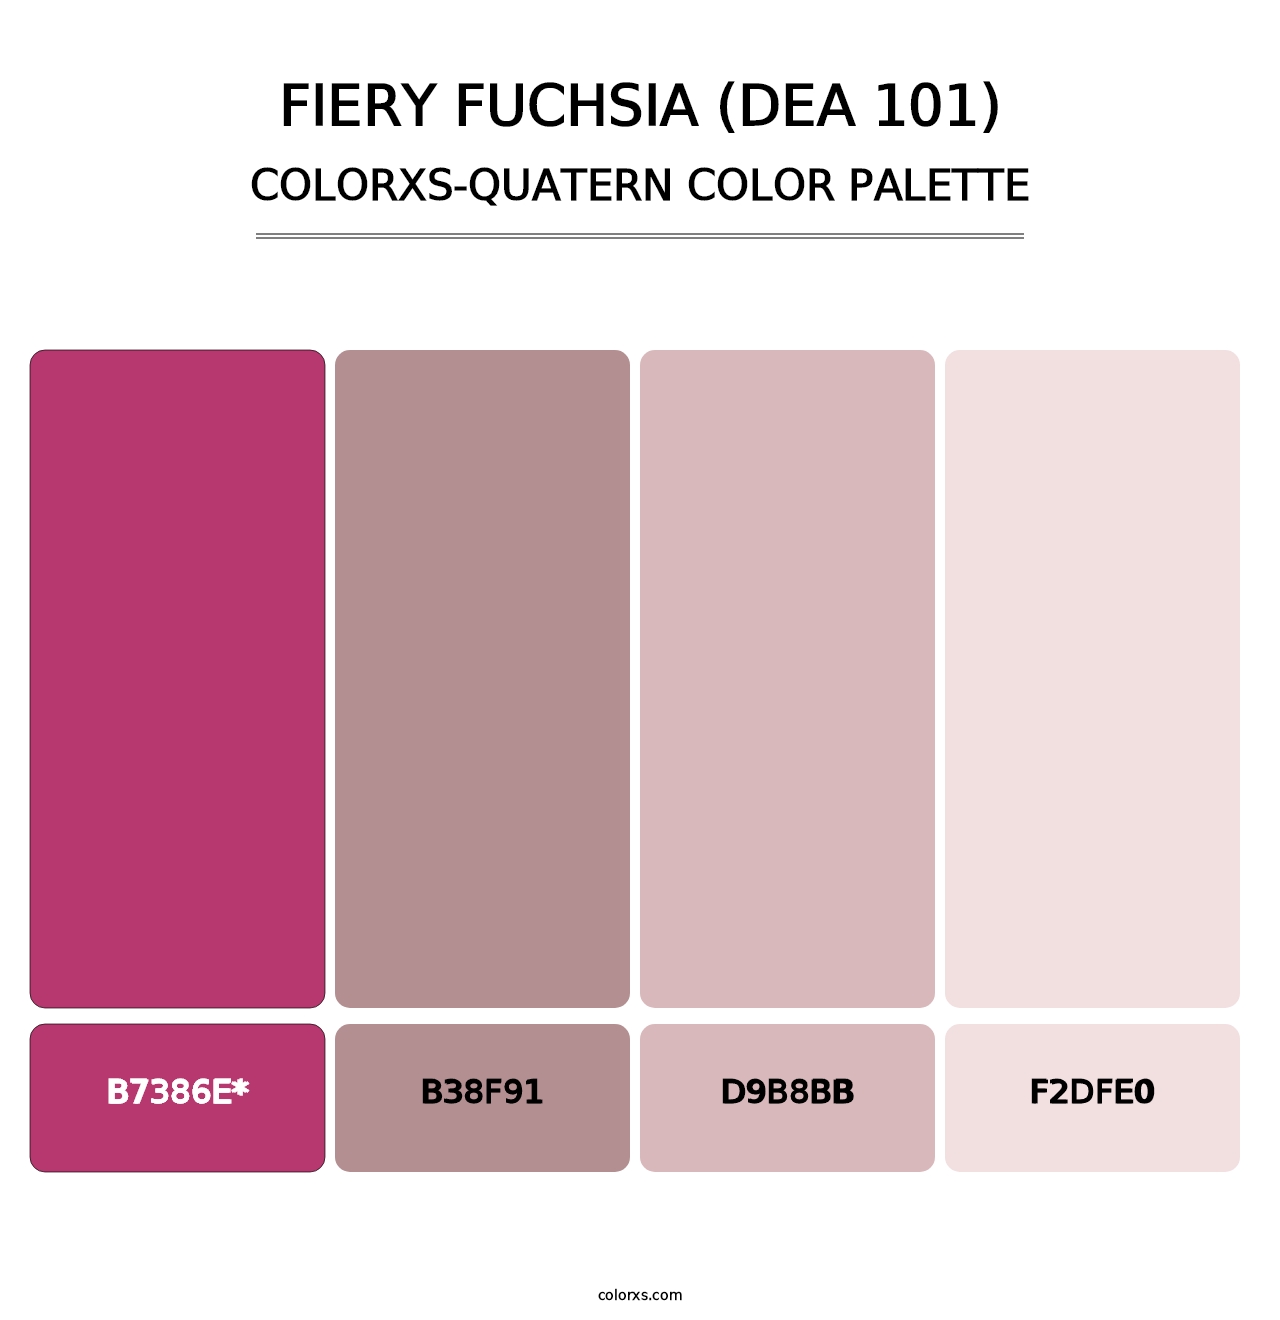 Fiery Fuchsia (DEA 101) - Colorxs Quatern Palette